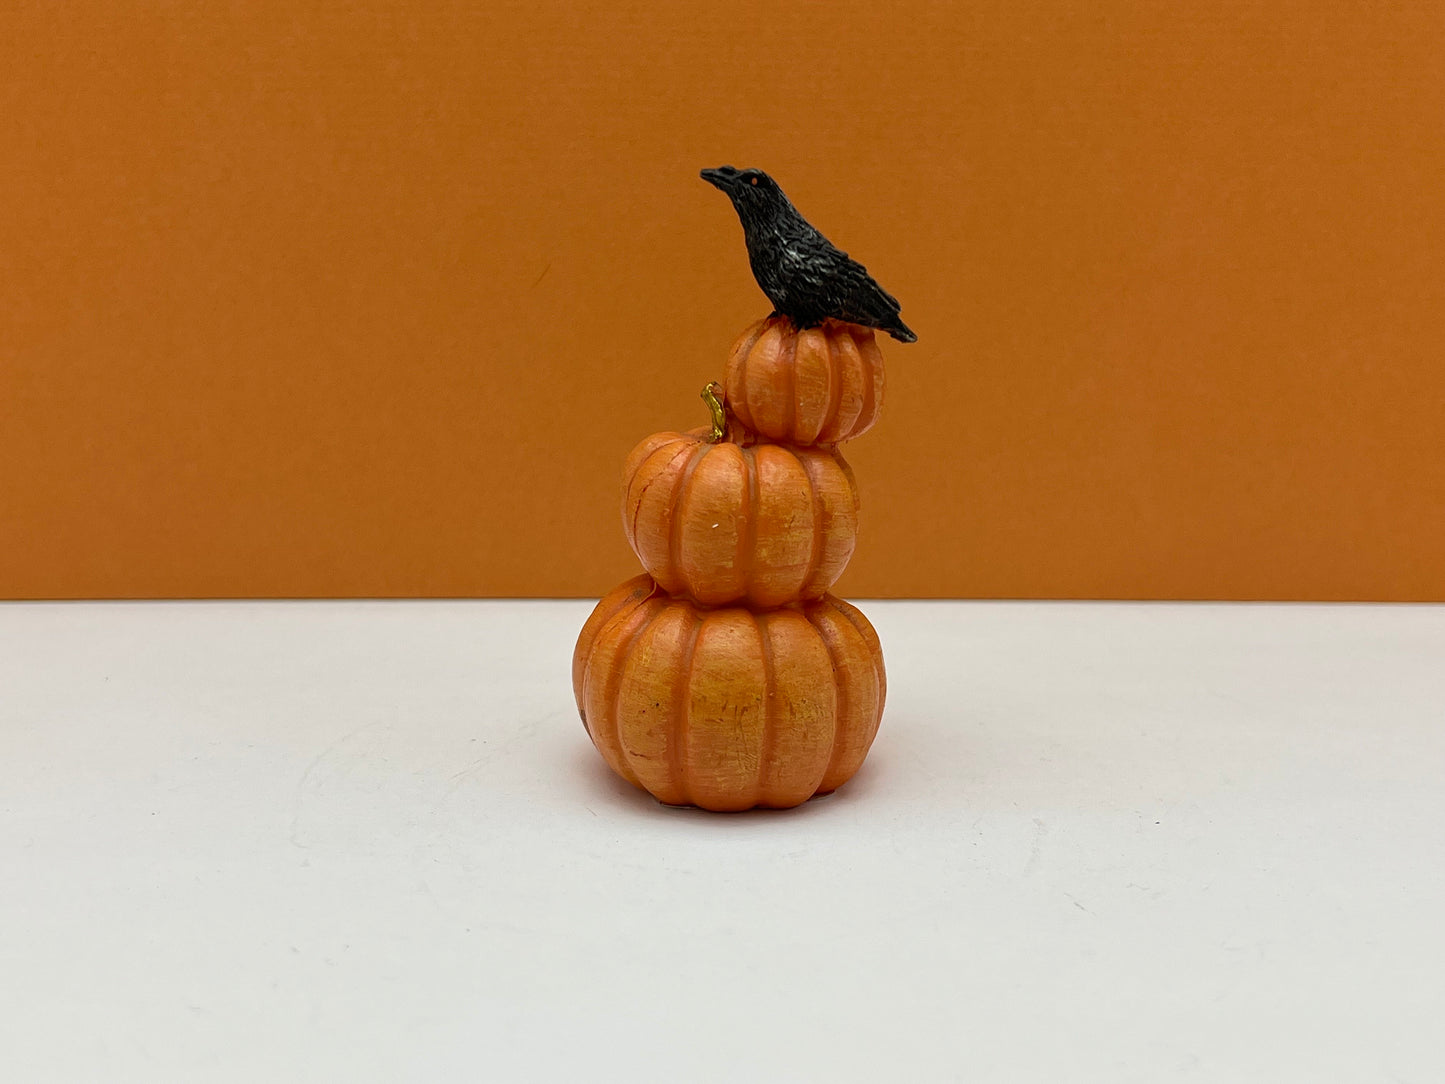 Jack-o-Lantern Pumpkin Stack Halloween